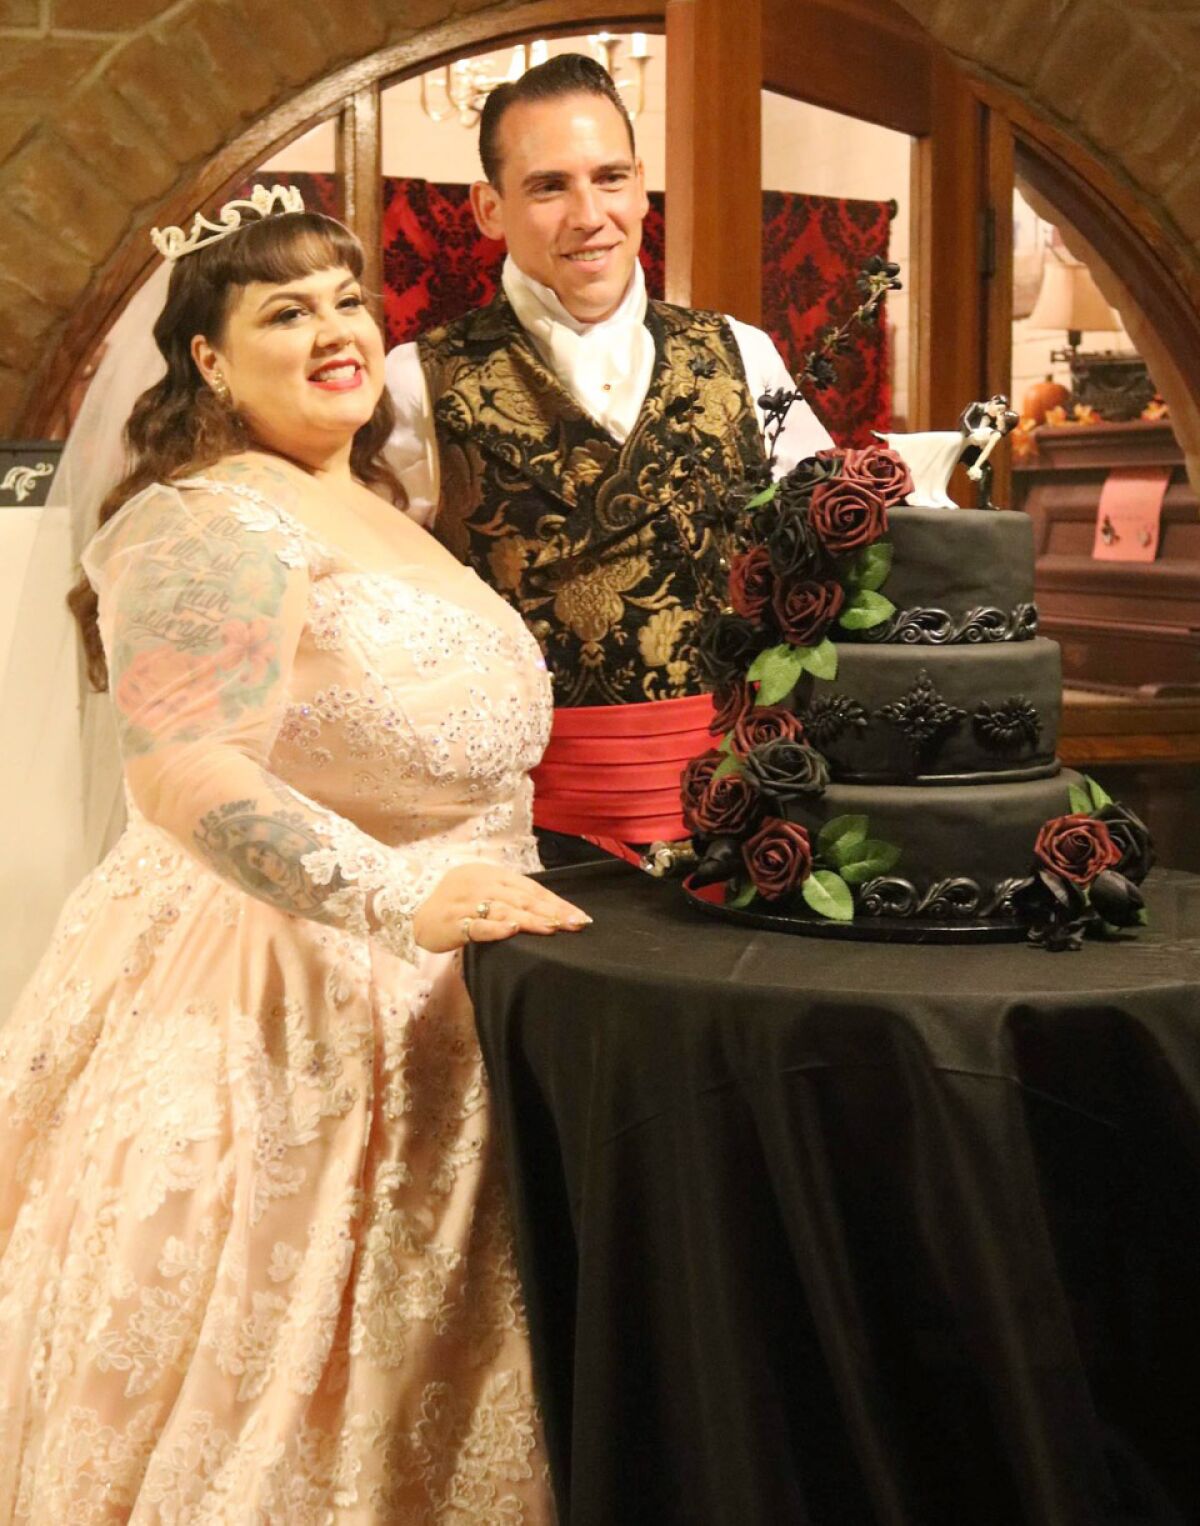 Krystine and Garrett Wear celebrated their Oct. 29 wedding with an elaborate black cake made by Alexis Henshaw.